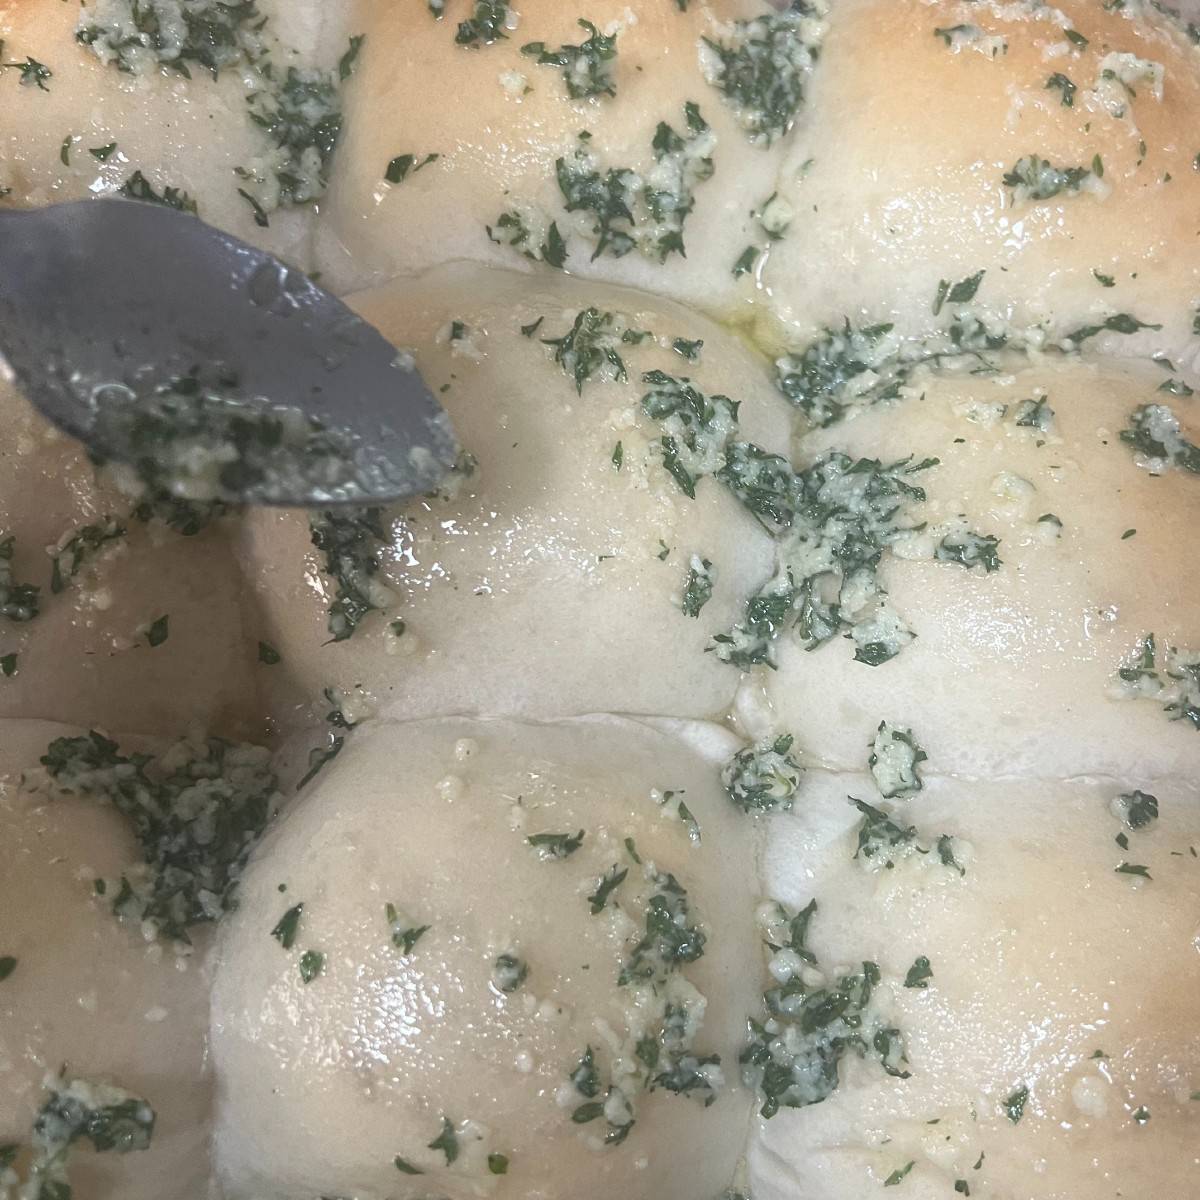 melt butter, garlic cheese and herb 